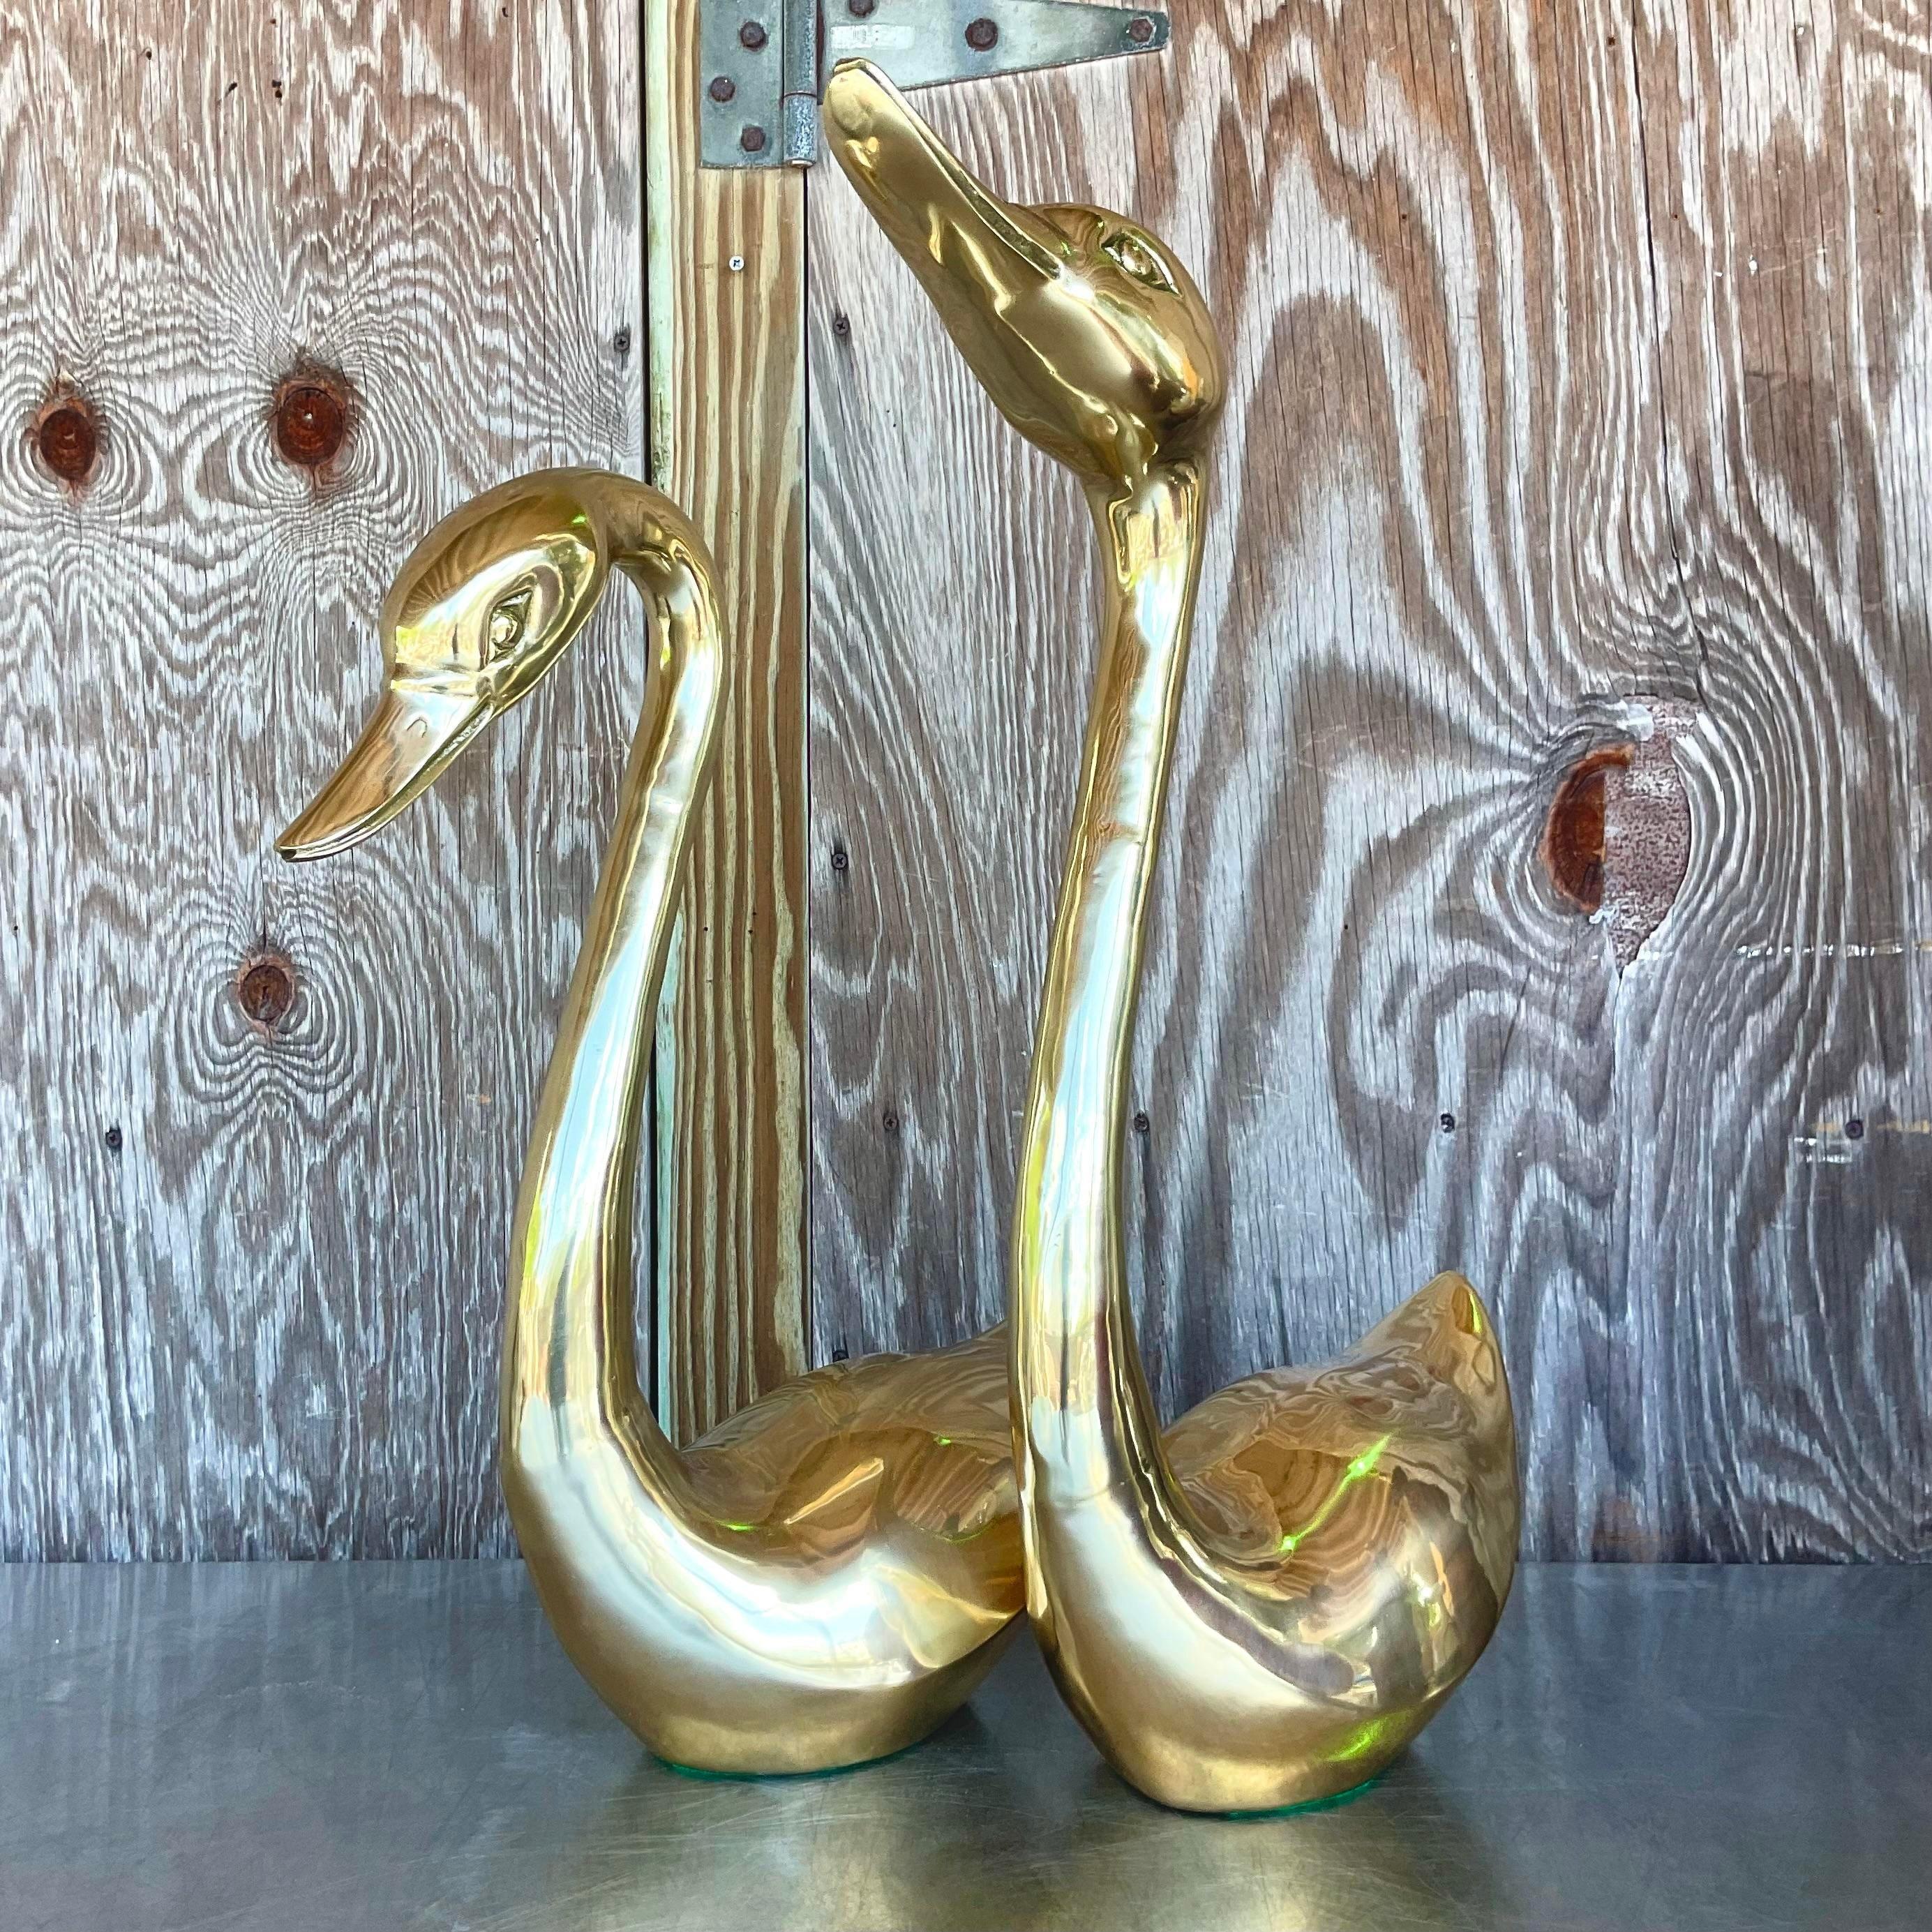 American Vintage Regency Solid Brass Ducks - a Pair For Sale